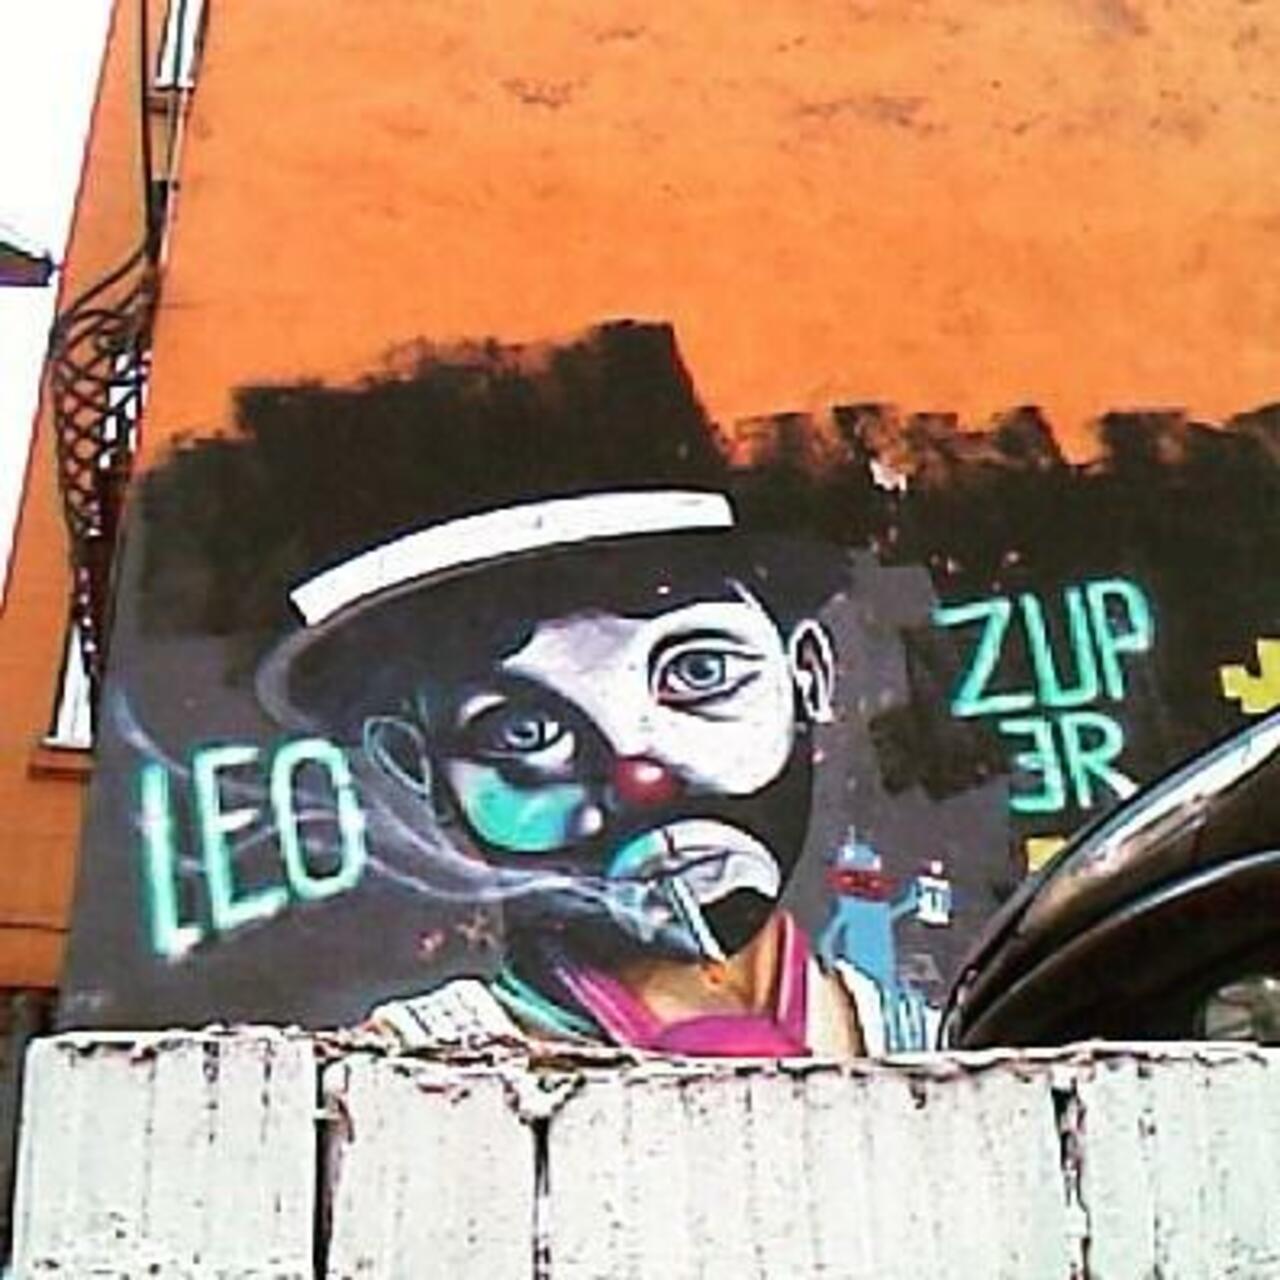 RT @StArtEverywhere: By @leolunatic @dsb_graff #dsb_graff @rsa_graffiti @streetawesome #streetart #urbanart #graffitiart #graffiti #stre… http://t.co/h2KD5db43G